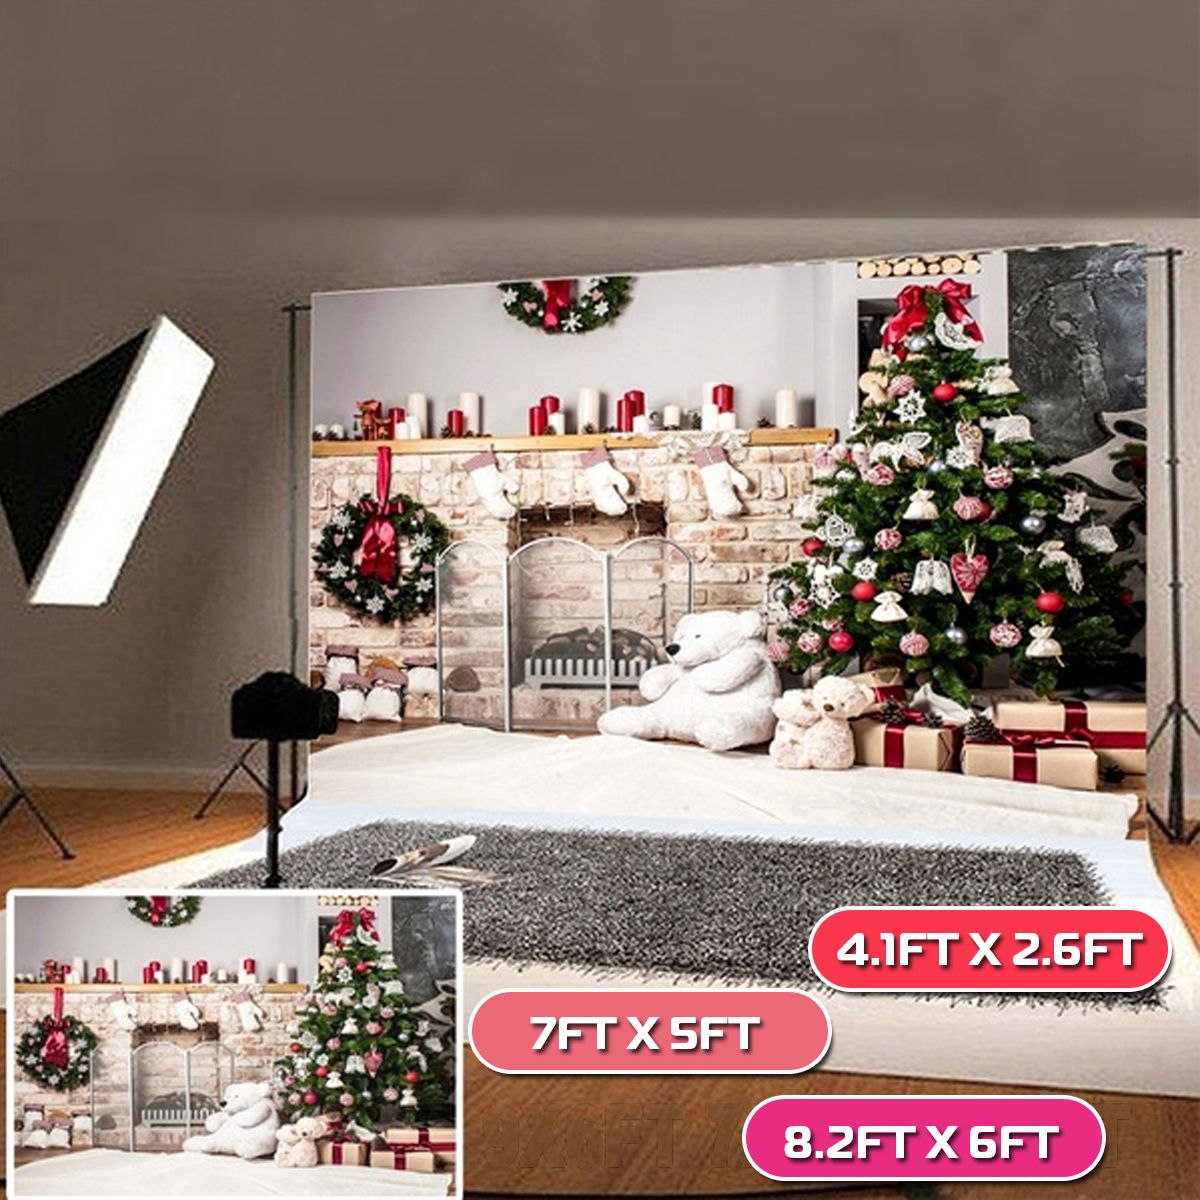 Christmas-Photography-Backdrop-3D-Tree-Brick-Fireplace-White-Bear-Printed-Vinyl-Photo-Studio-Backgro-1759899